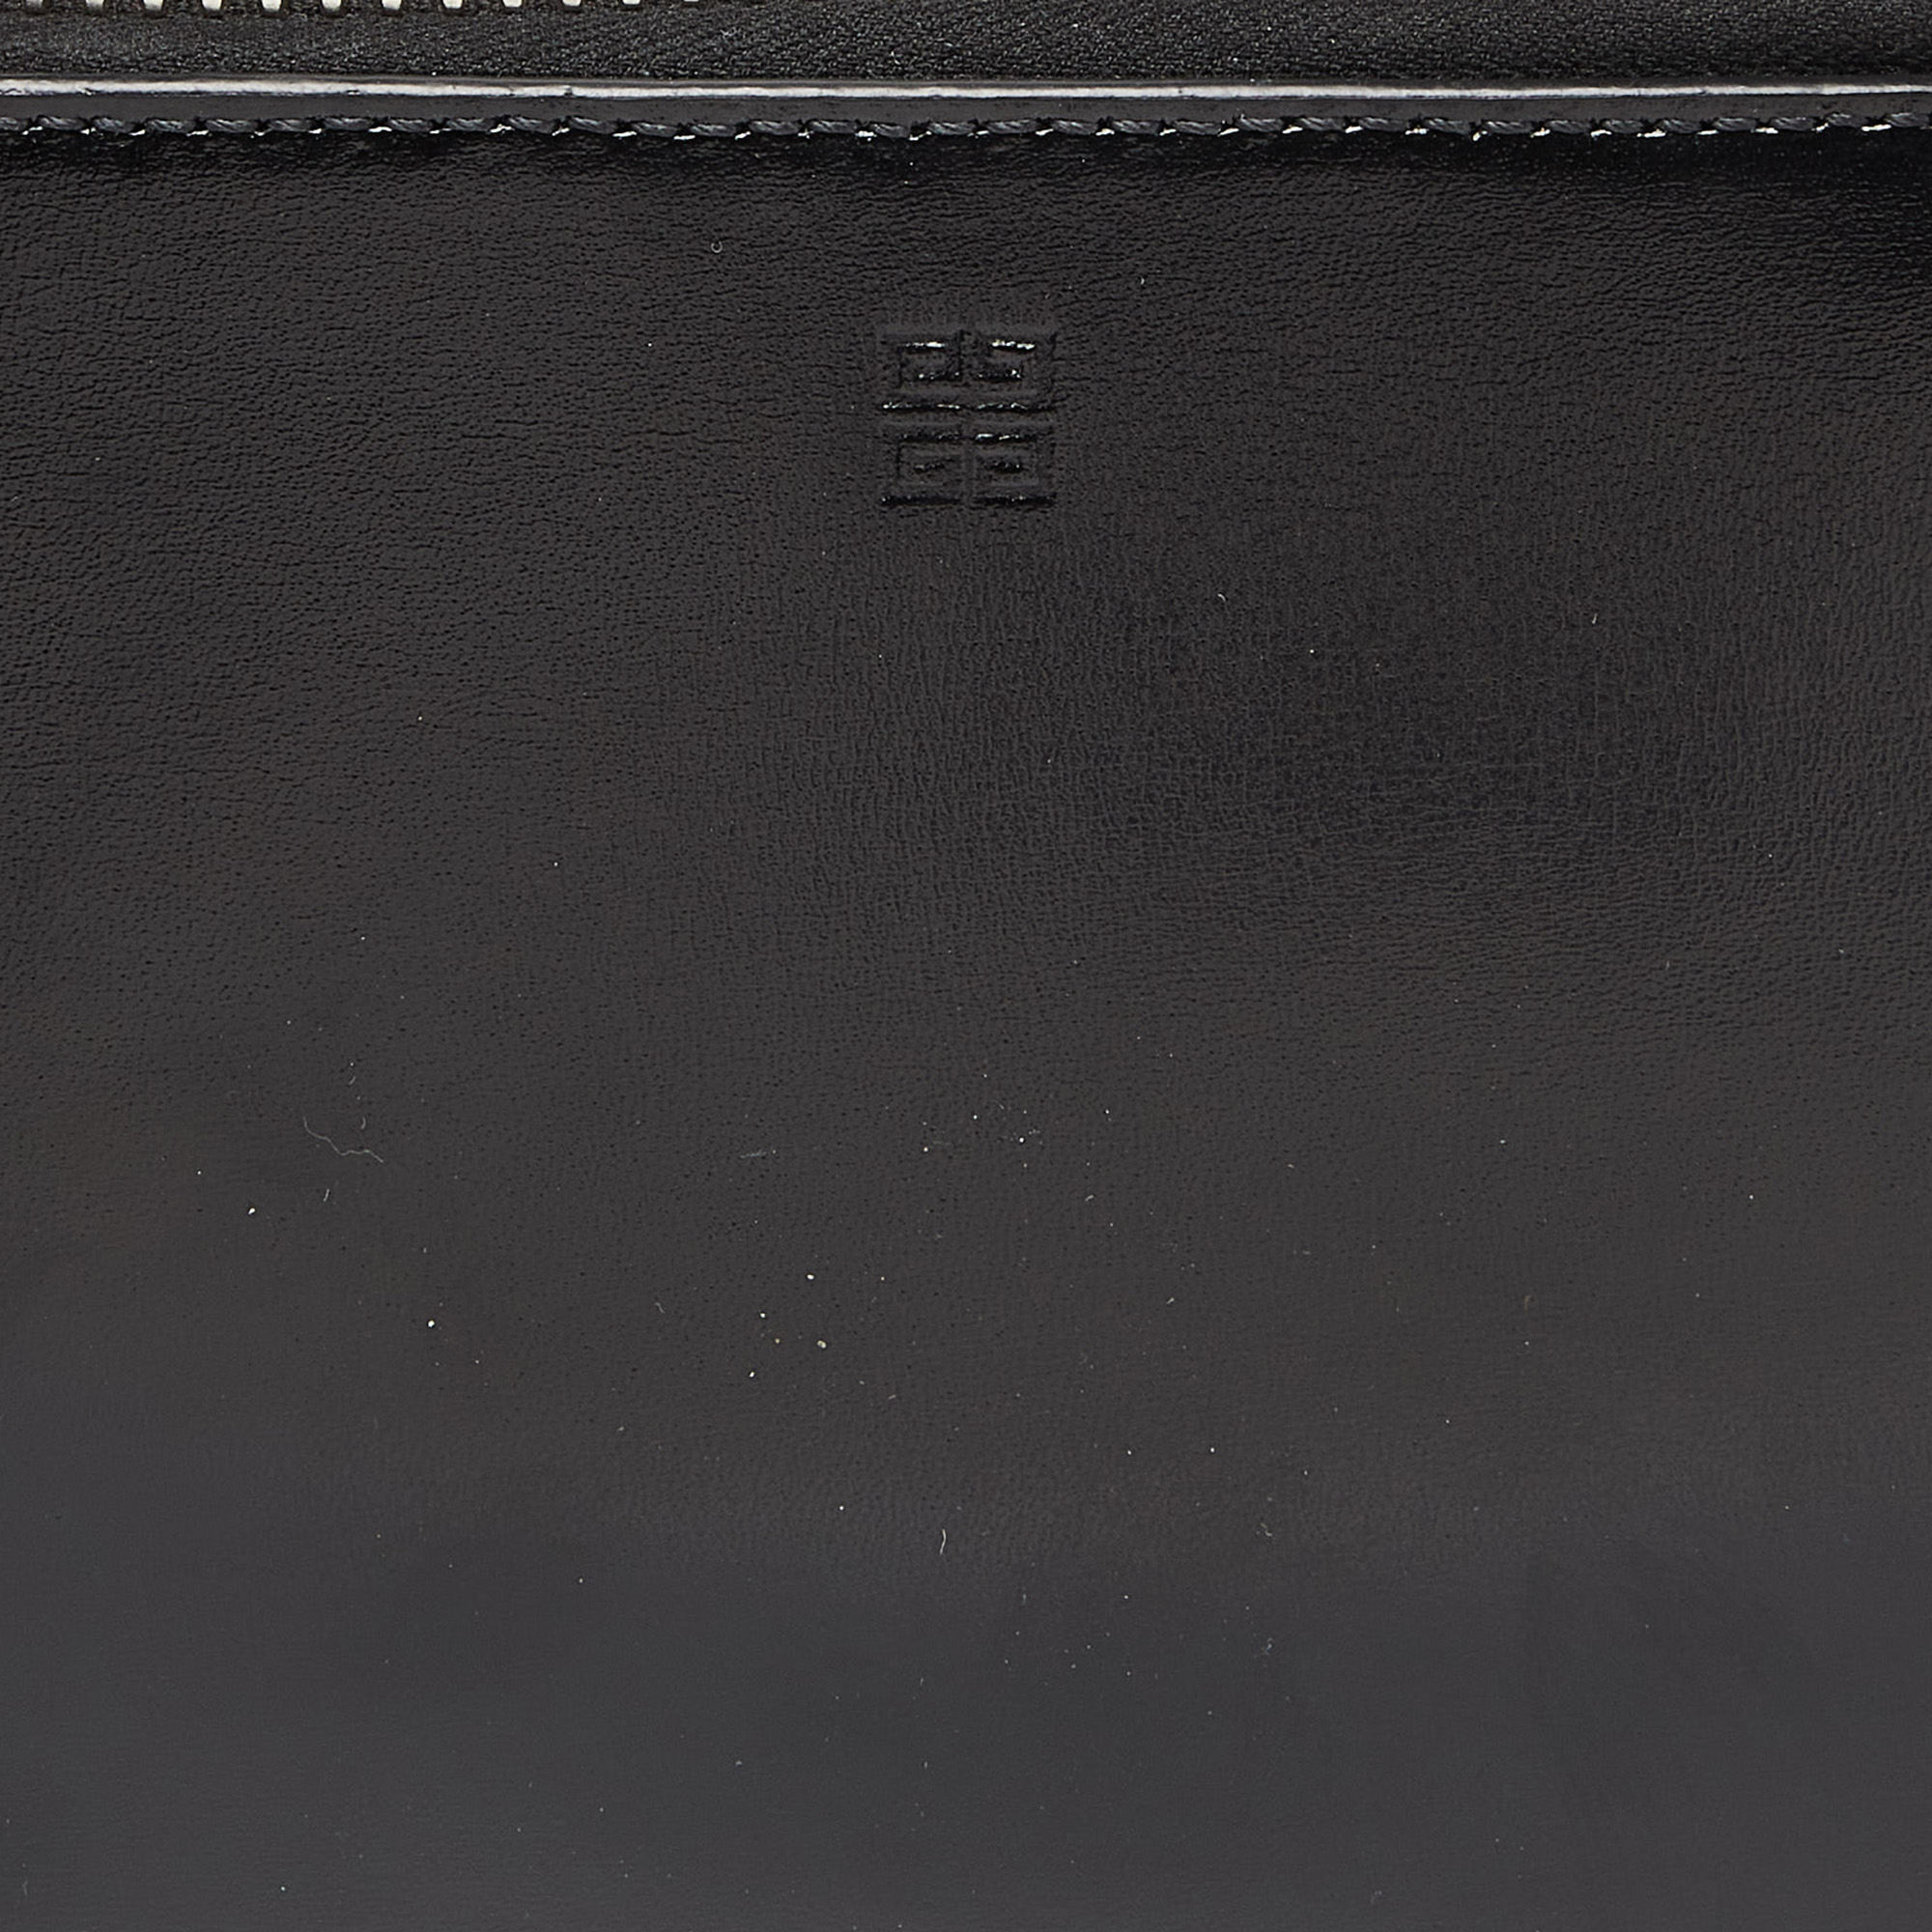 Givenchy Black Leather Antigona Sling Bag